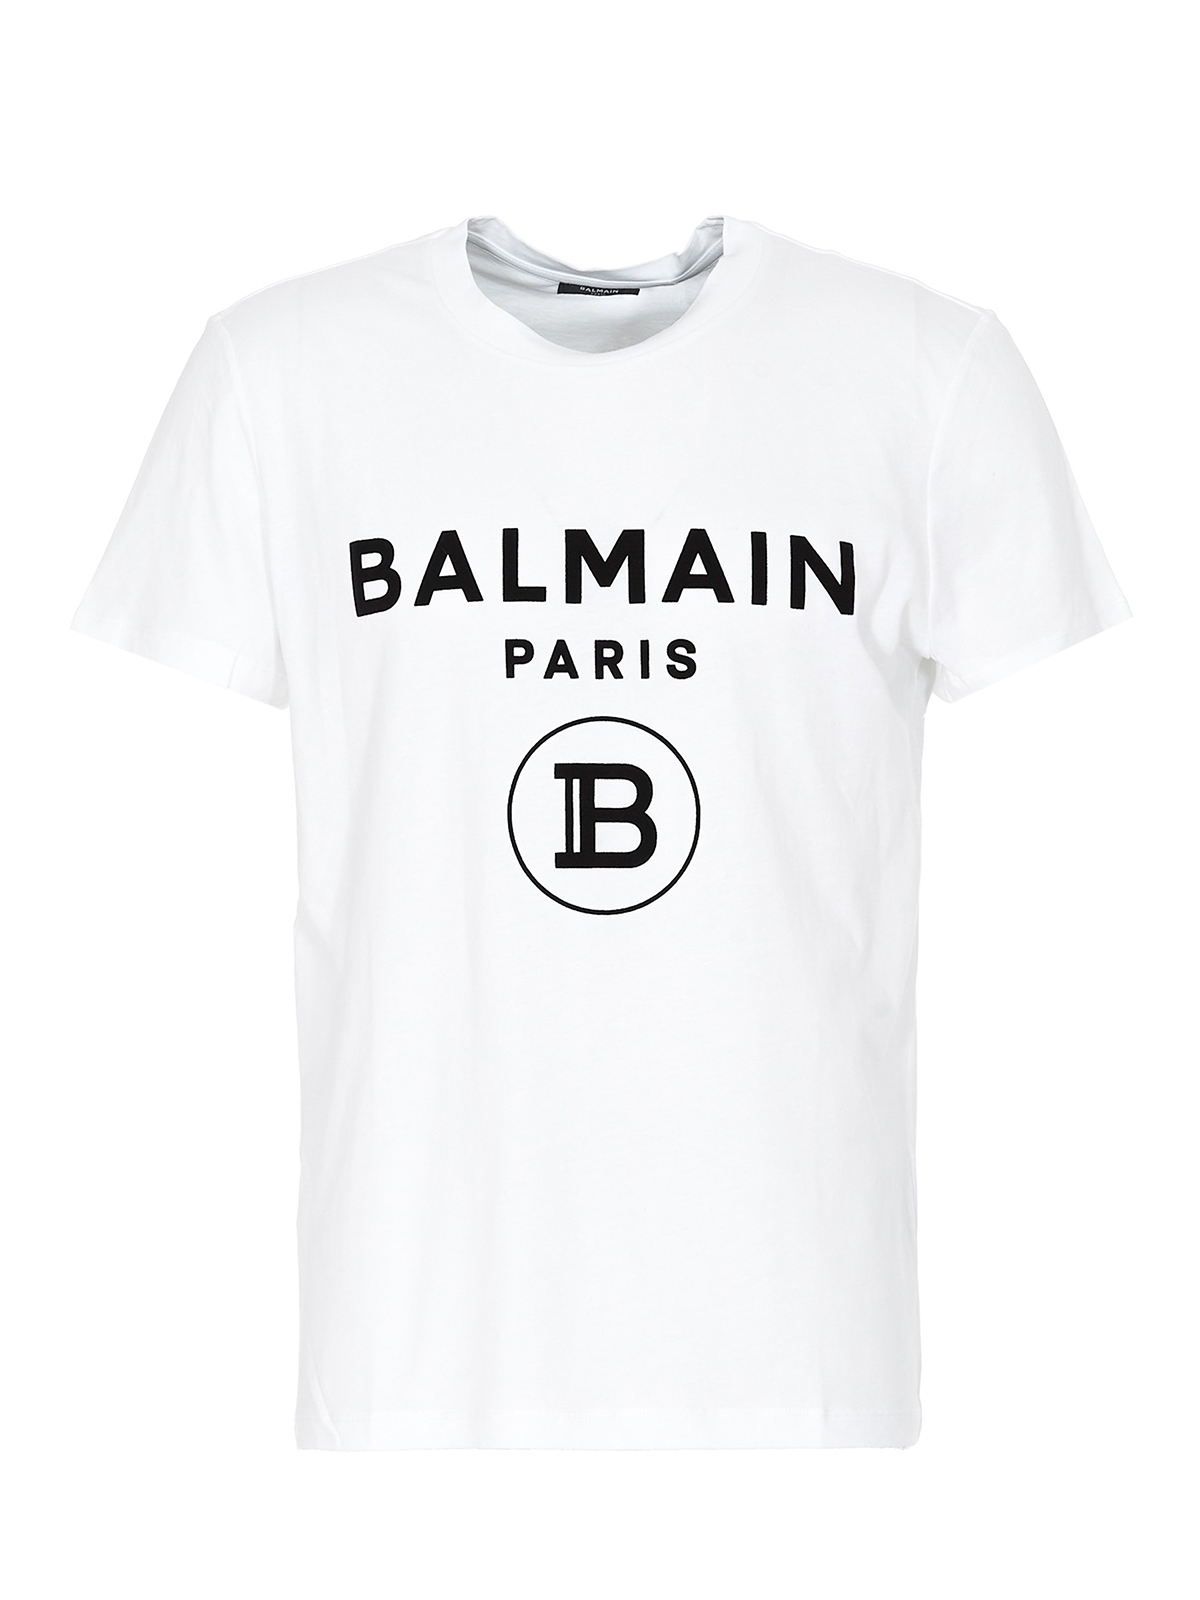 Tシャツ Balmain - Tシャツ - 白 - UH11601I372GAB | iKRIX shop online